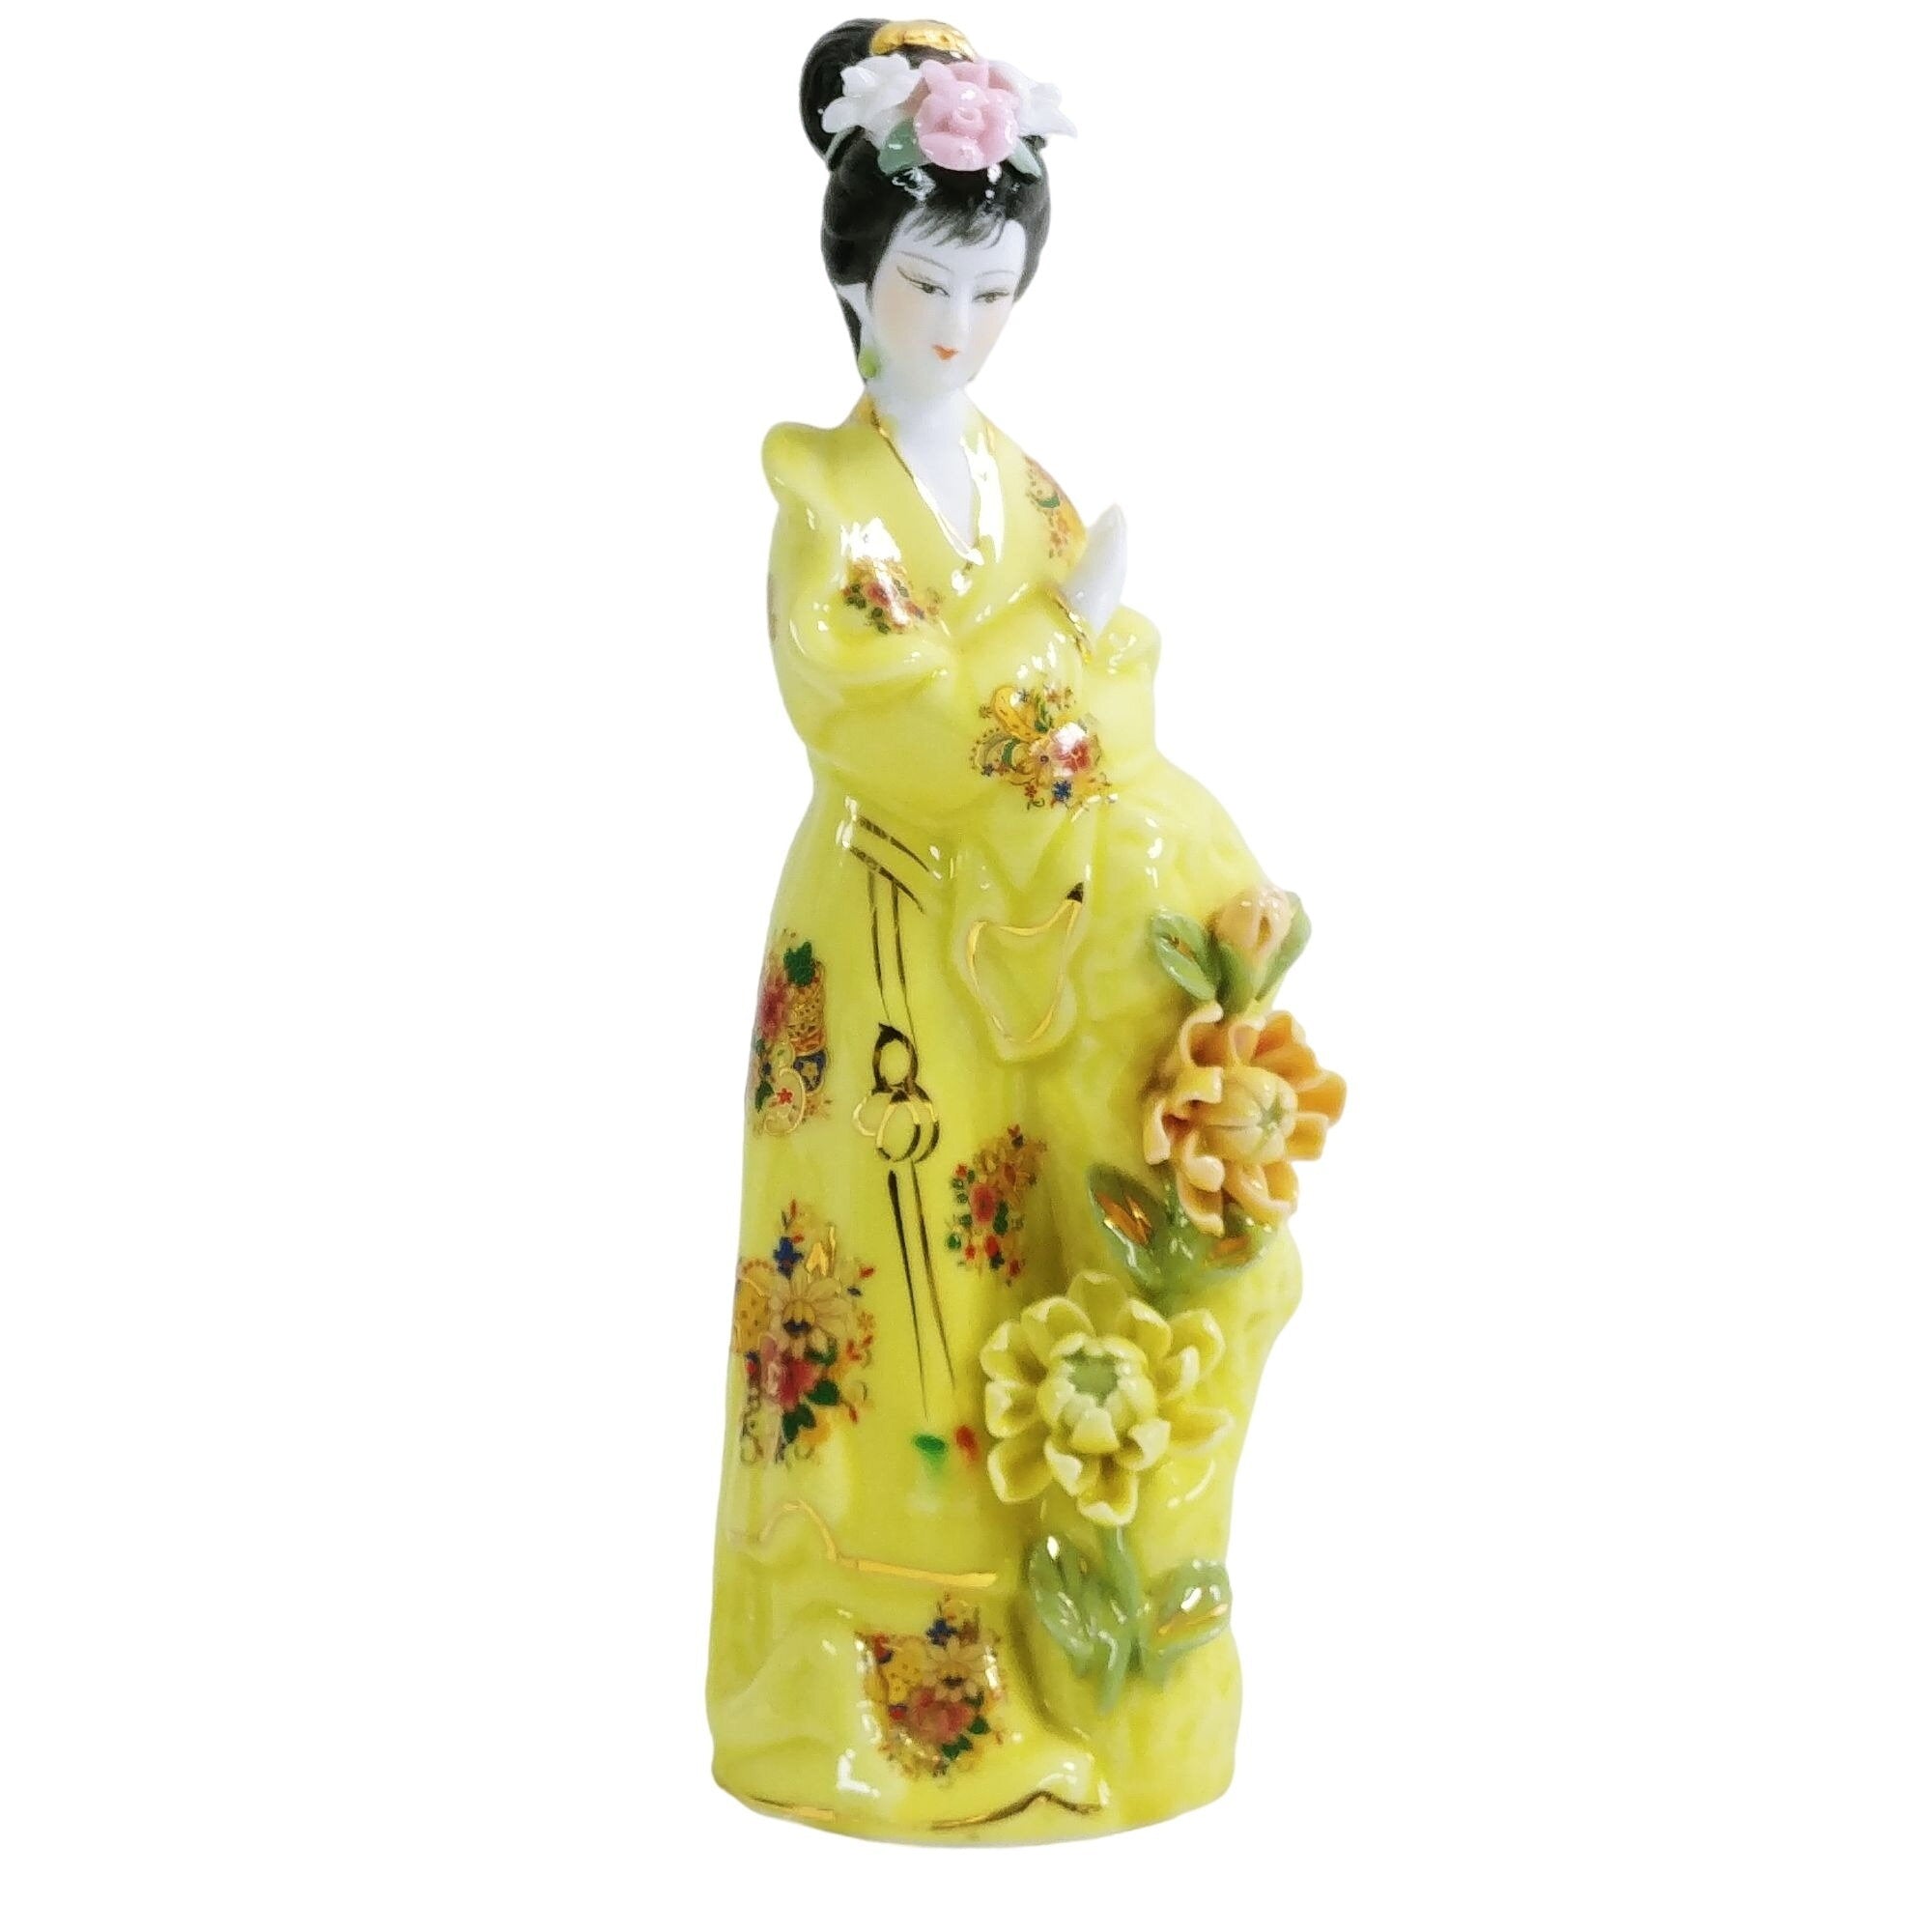 Figurine Asian Geisha Girl Bisque Face Hand Painted Ceramic 9.5"